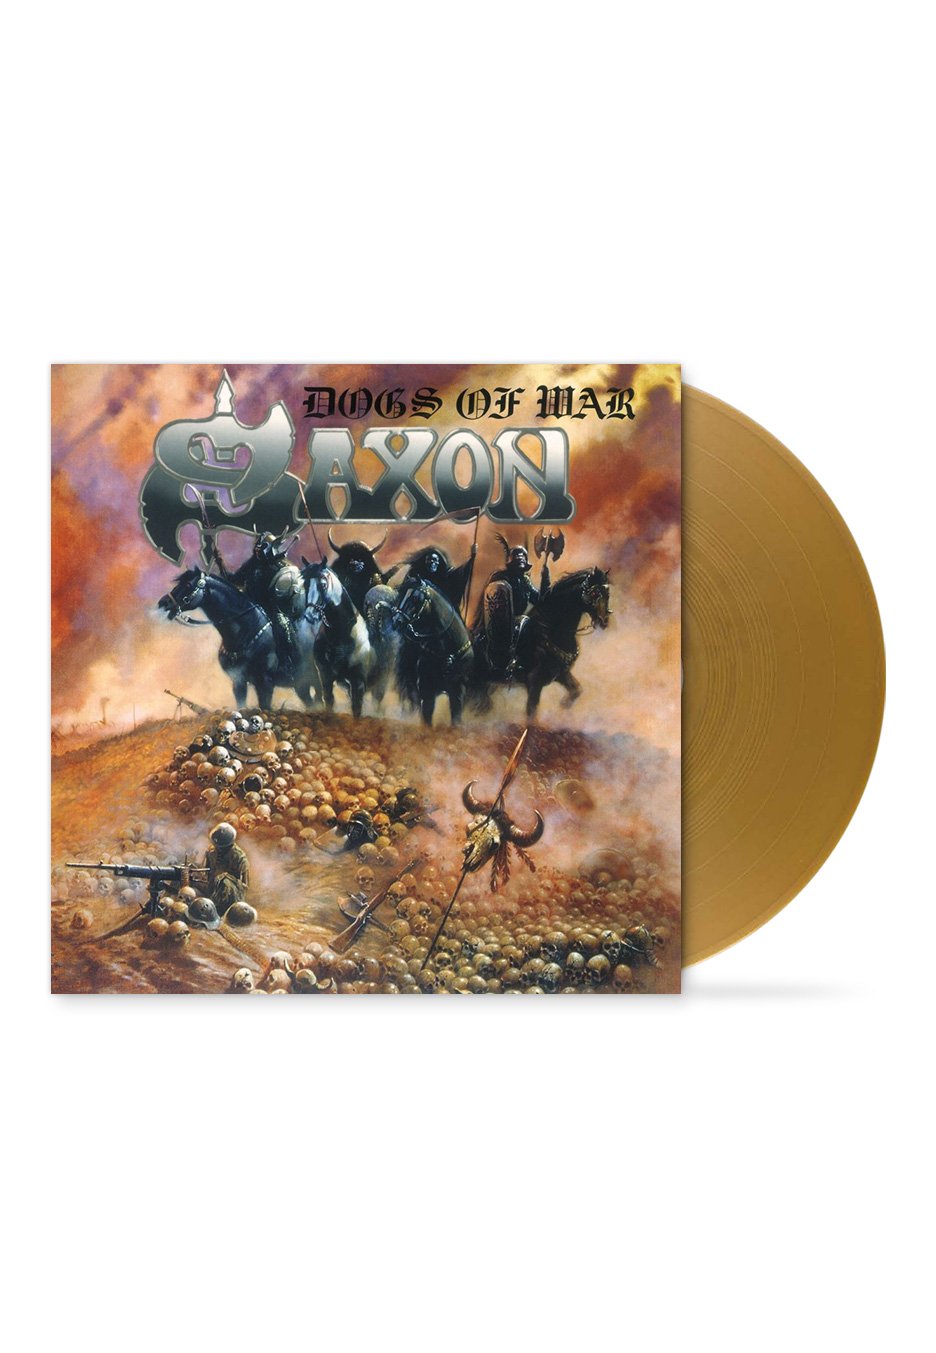 Saxon - Dogs Of War Gold Ltd. - Colored Vinyl